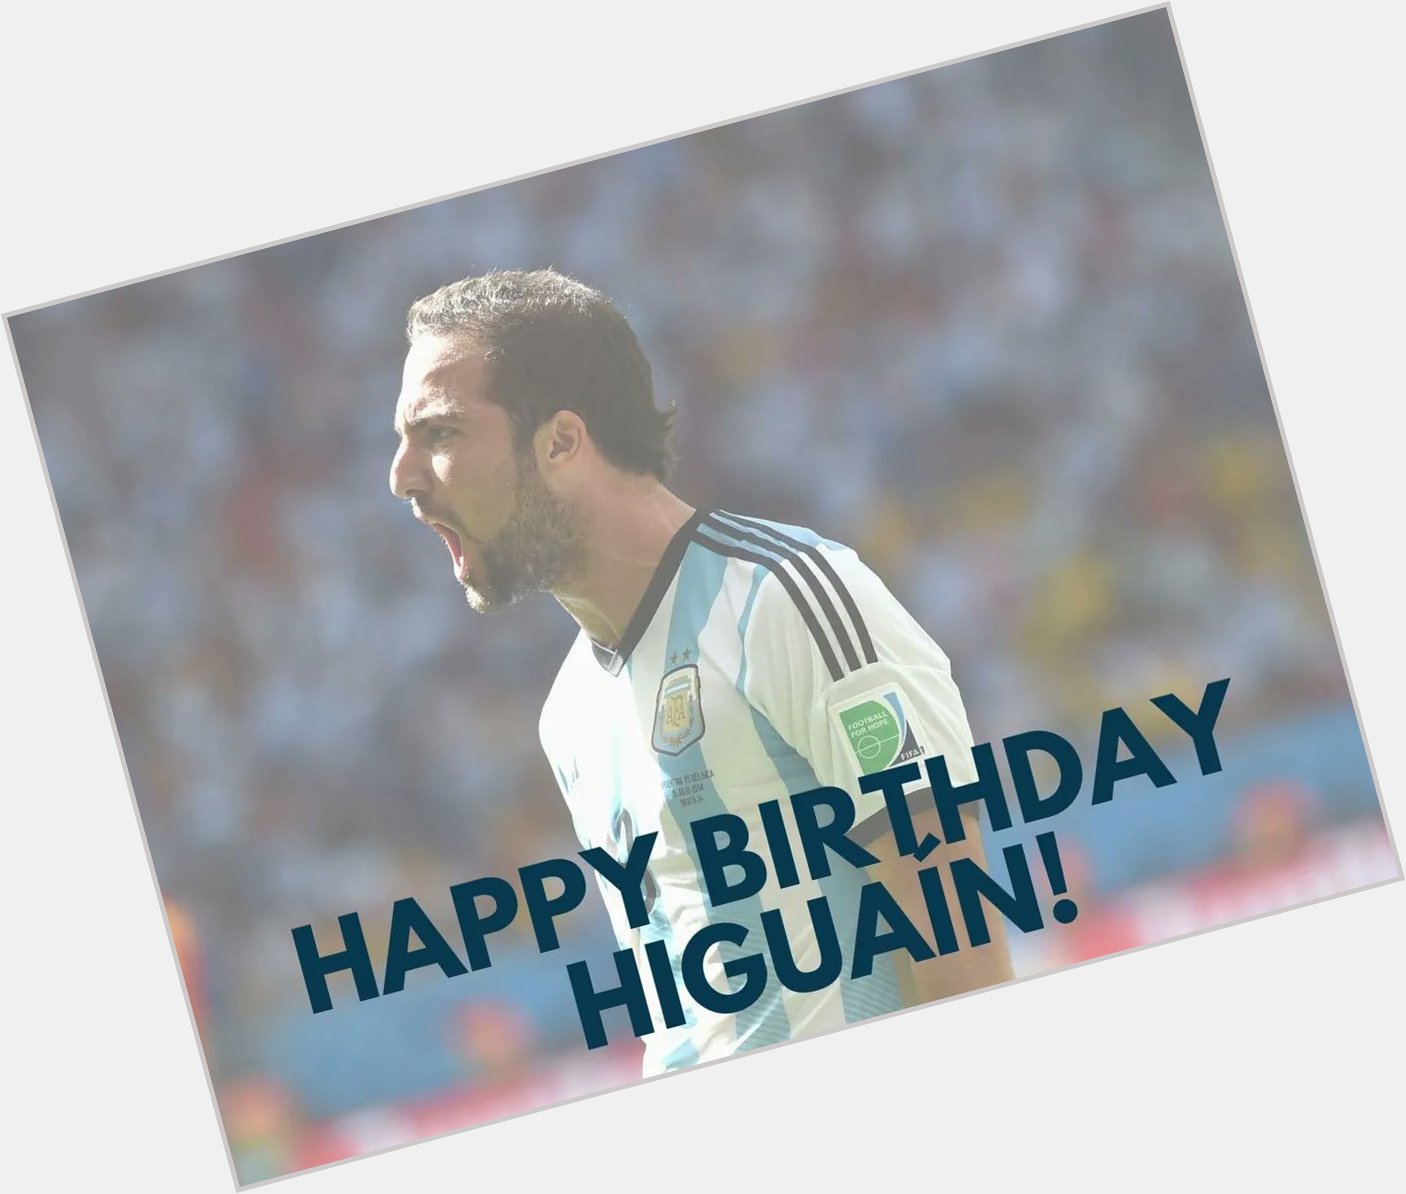 Happy Birthday Gonzalo Higuaín
**OVERRATED** 